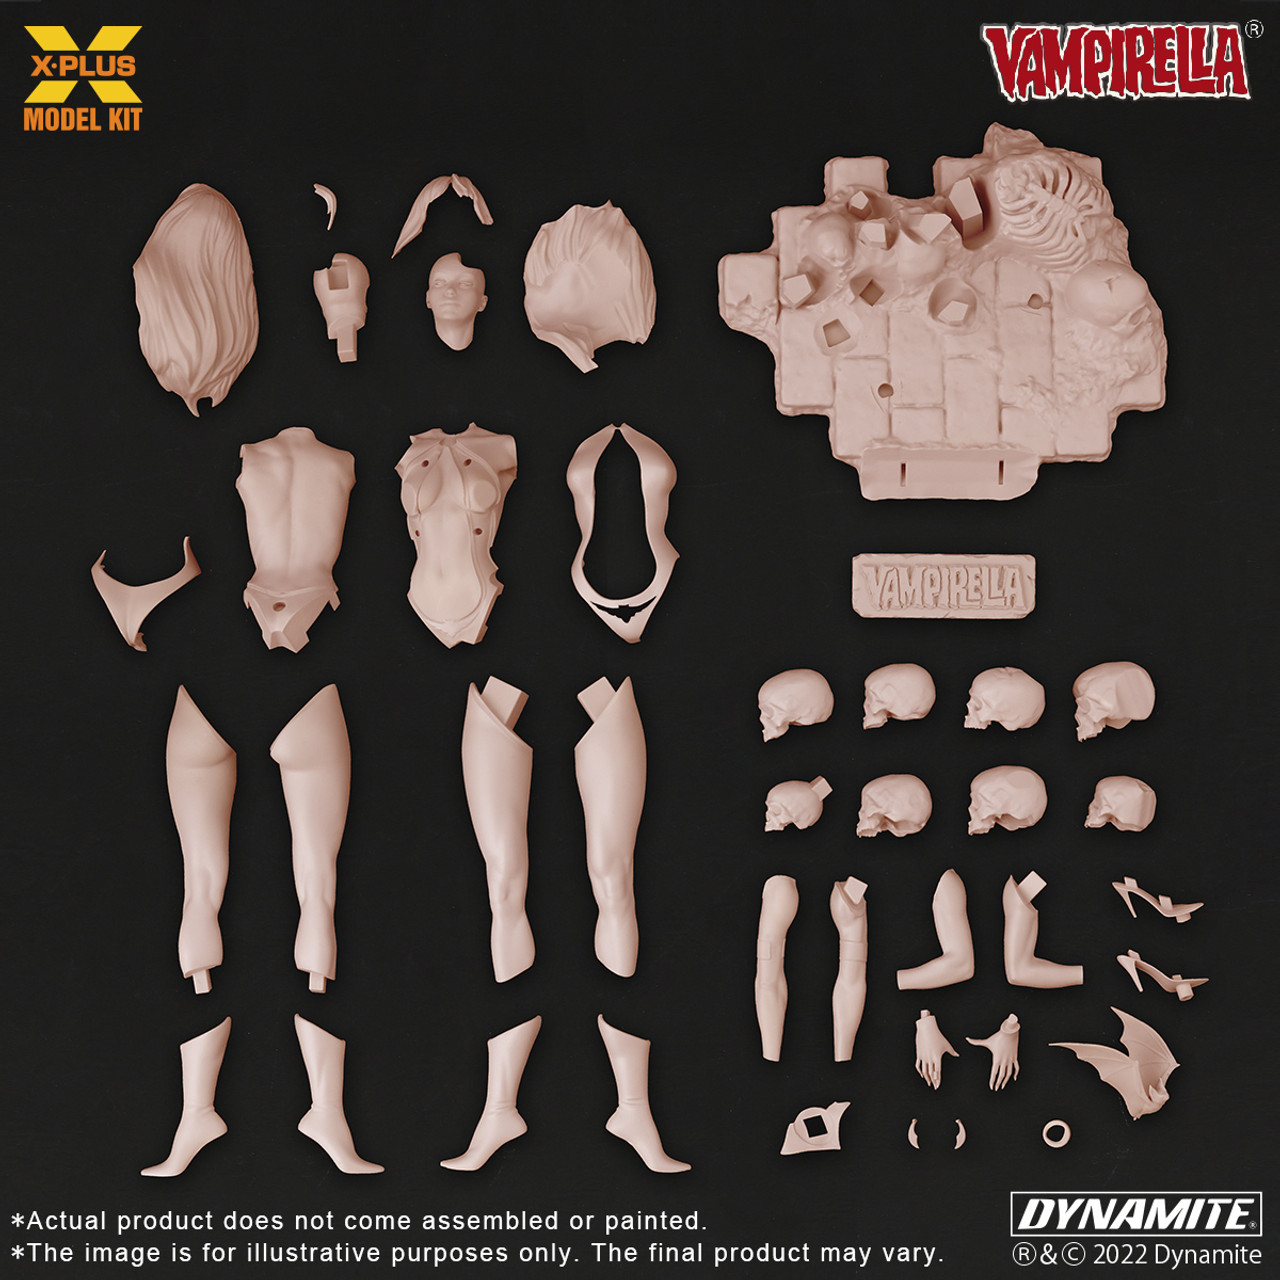 X-Plus Vampirella 2.0 (Jose Gonzalex Ed.) model kit